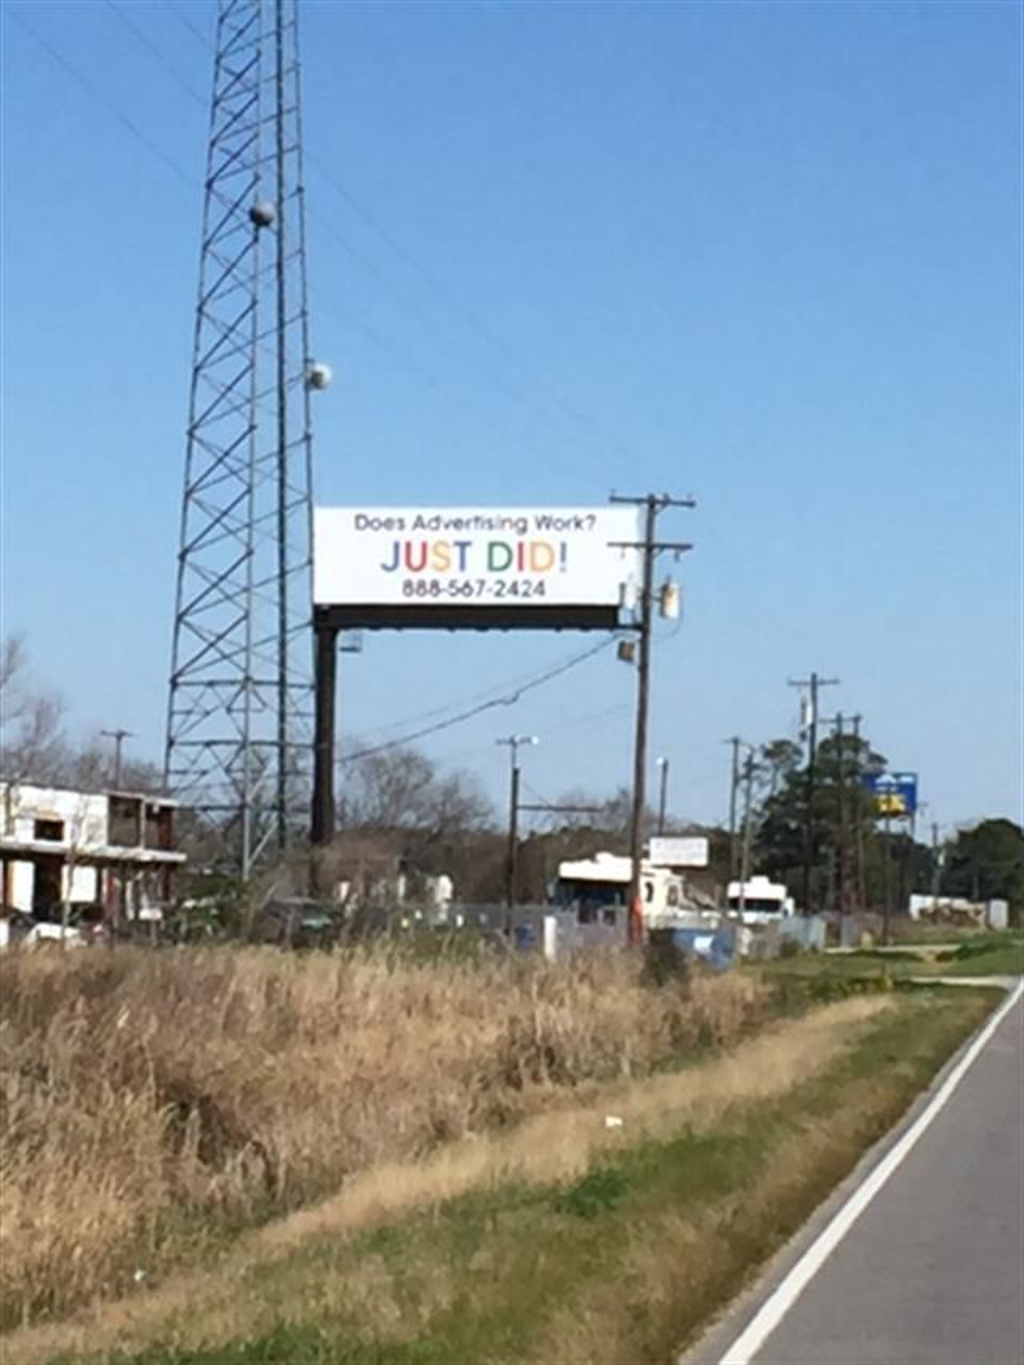 Photo of a billboard in Iota